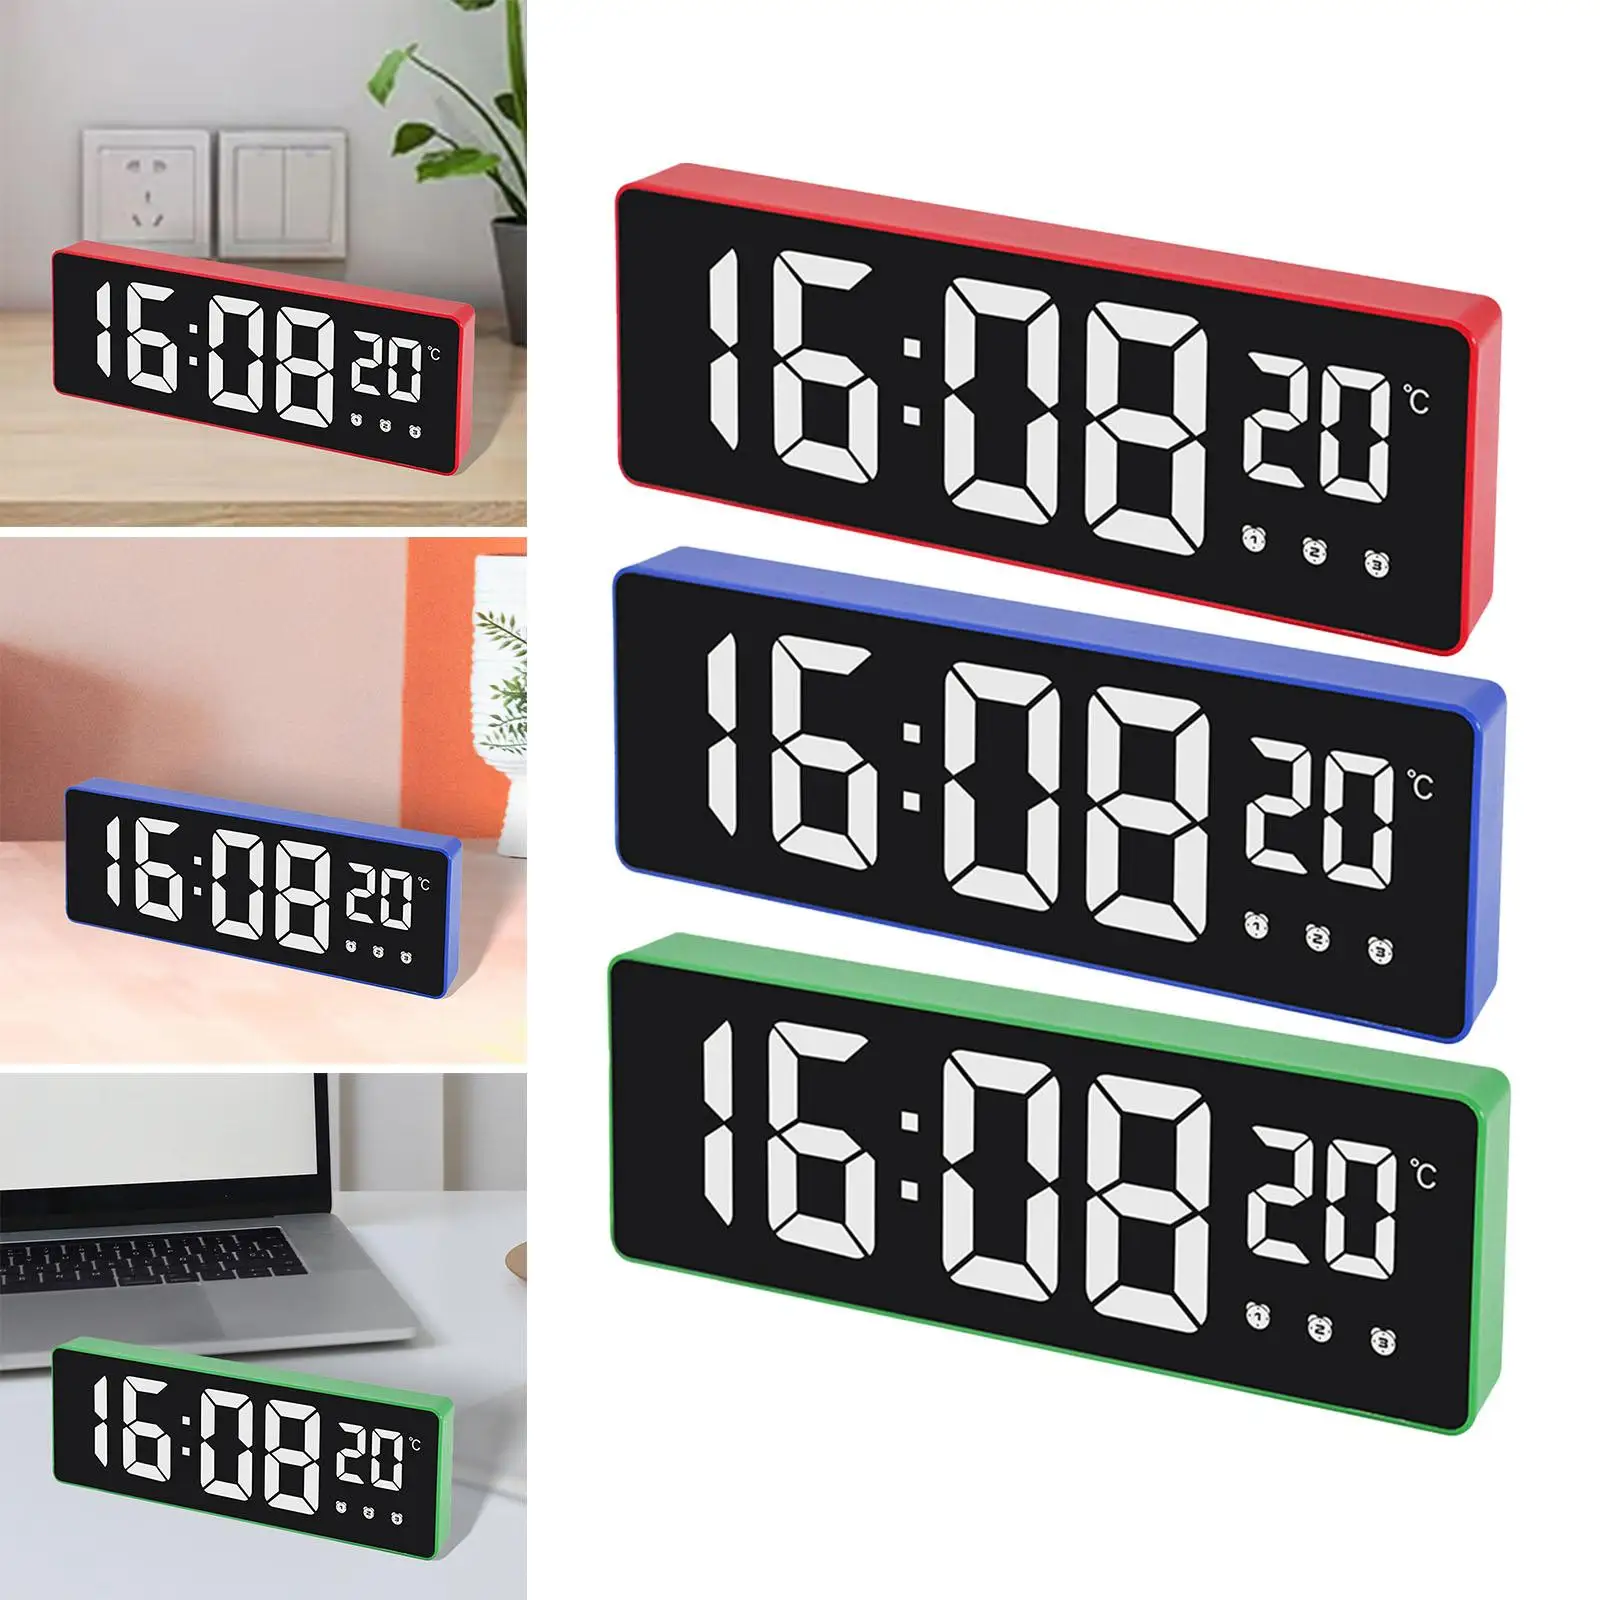 Digital Alarm Clock Voice Control Temperature Display Large Number Silent LED Screen for Indoor Desktop Office Home Date